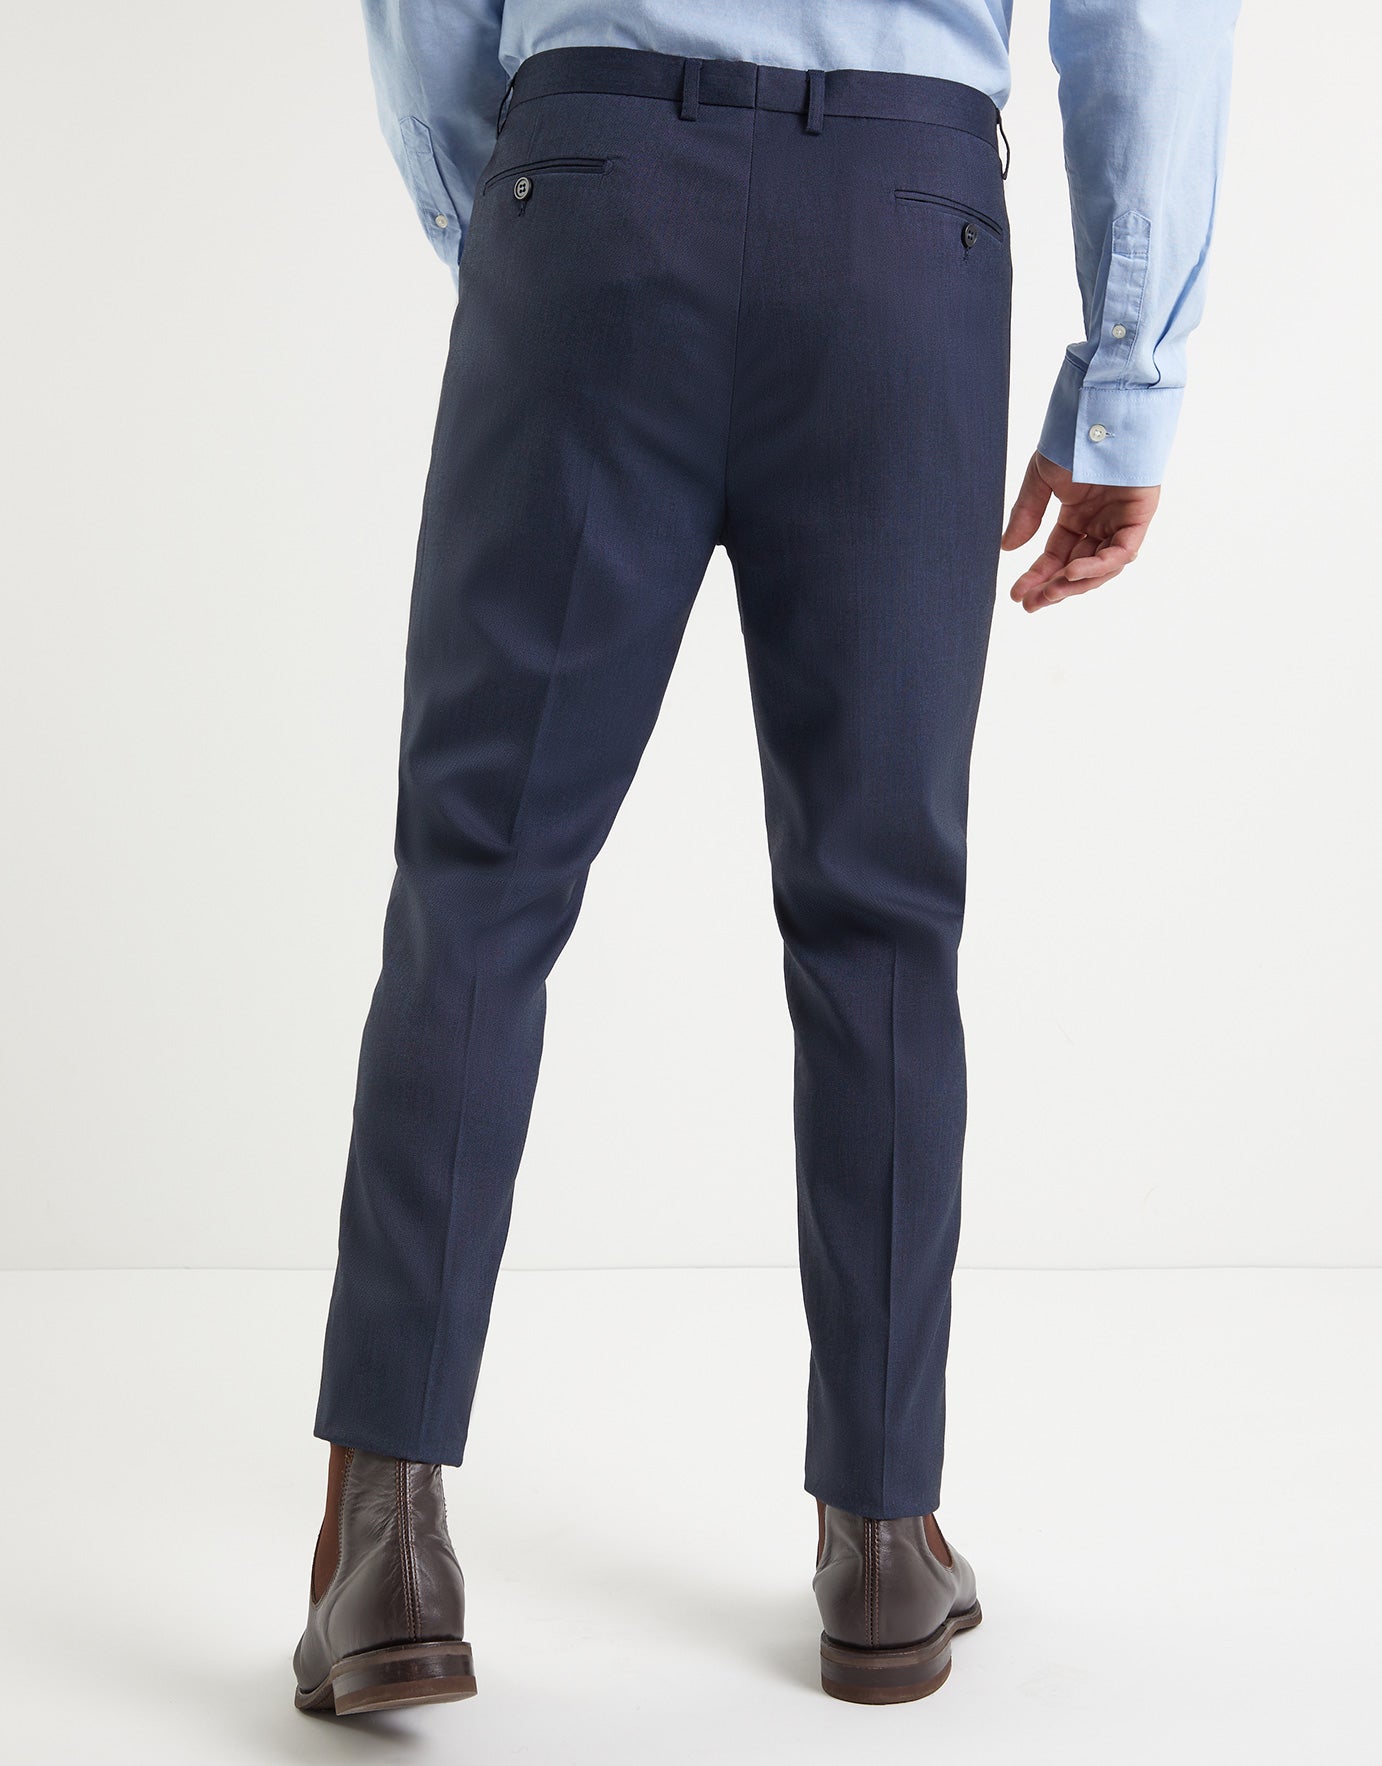 Buy Mens Cotton Chino Stretch Slim Fit Pants Skinny Casual Buniness Skinny  Trousers  Navy 32 Online  Kogancom 